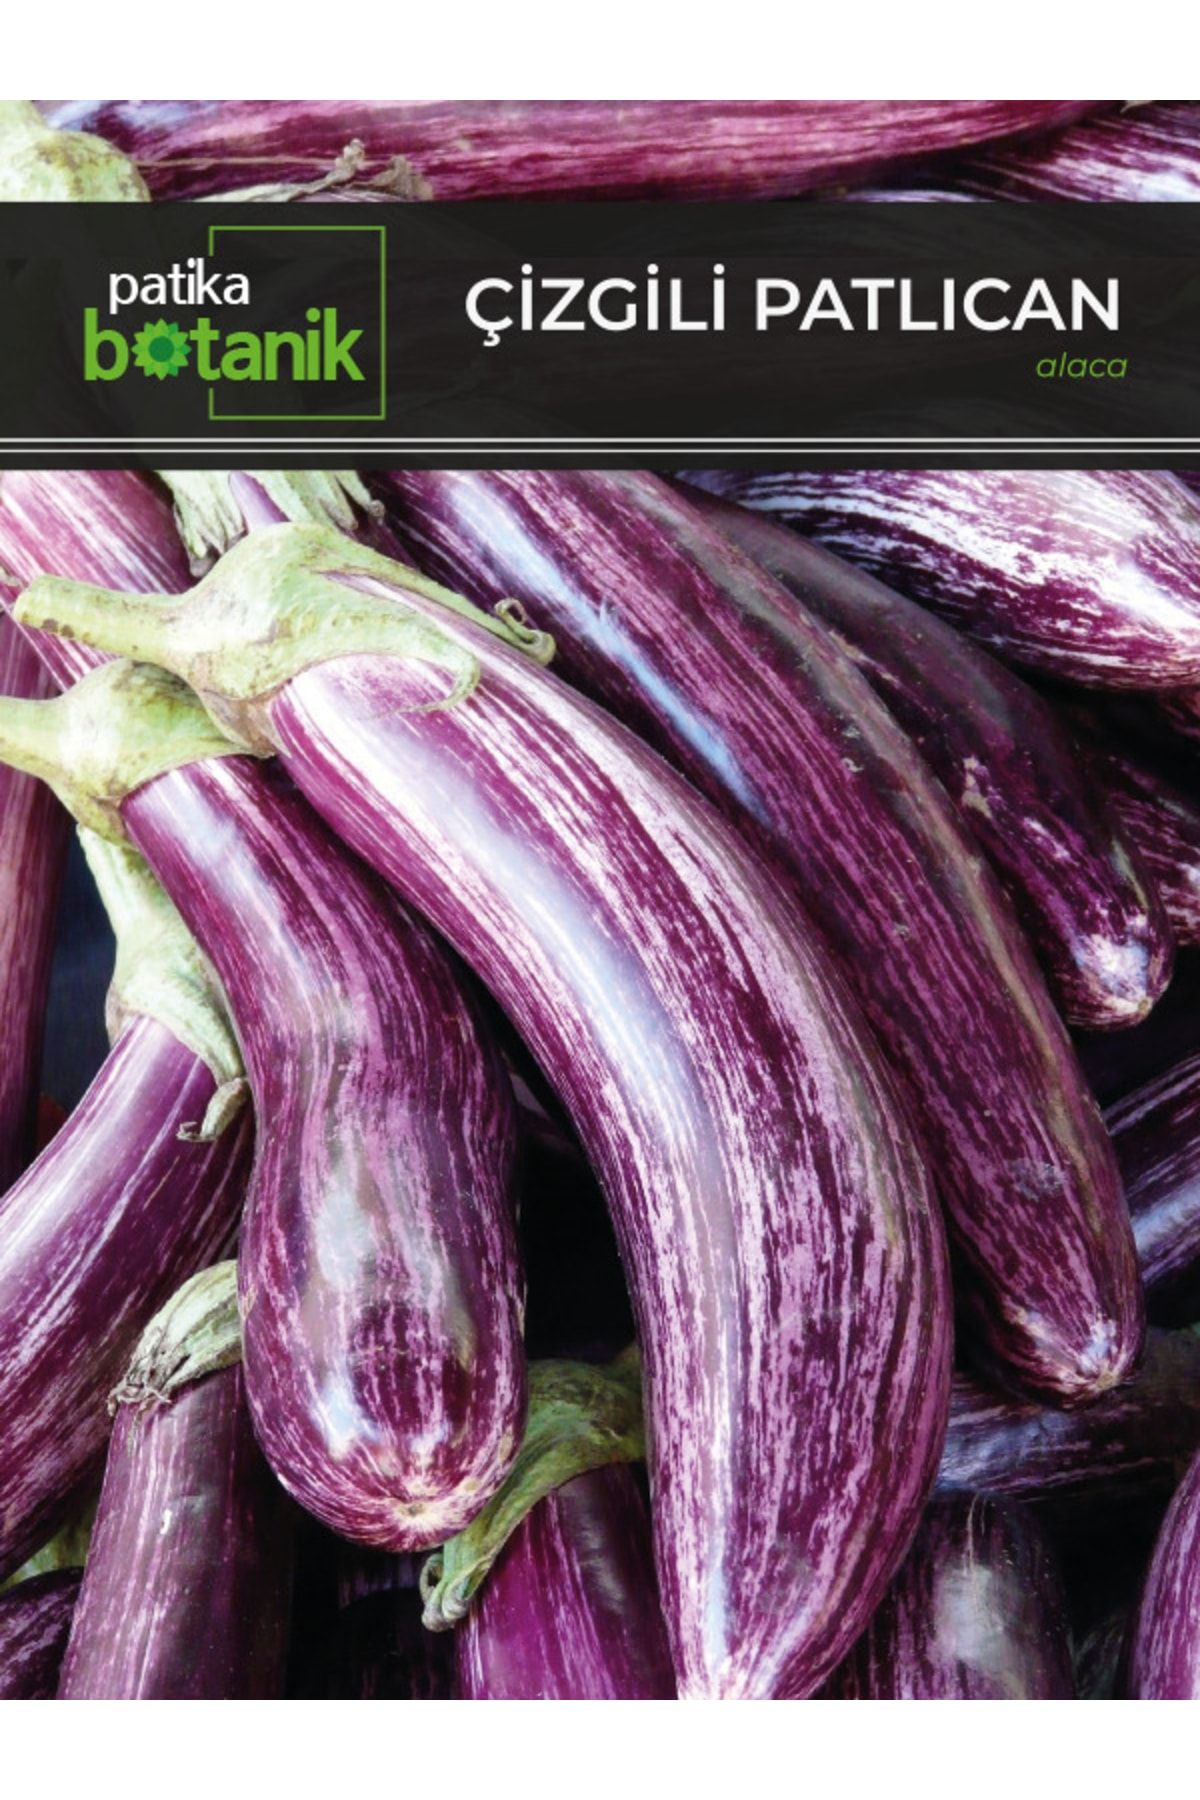 Patika Botanik 200 Adet Çizgili/alaca Patlıcan Tohumu